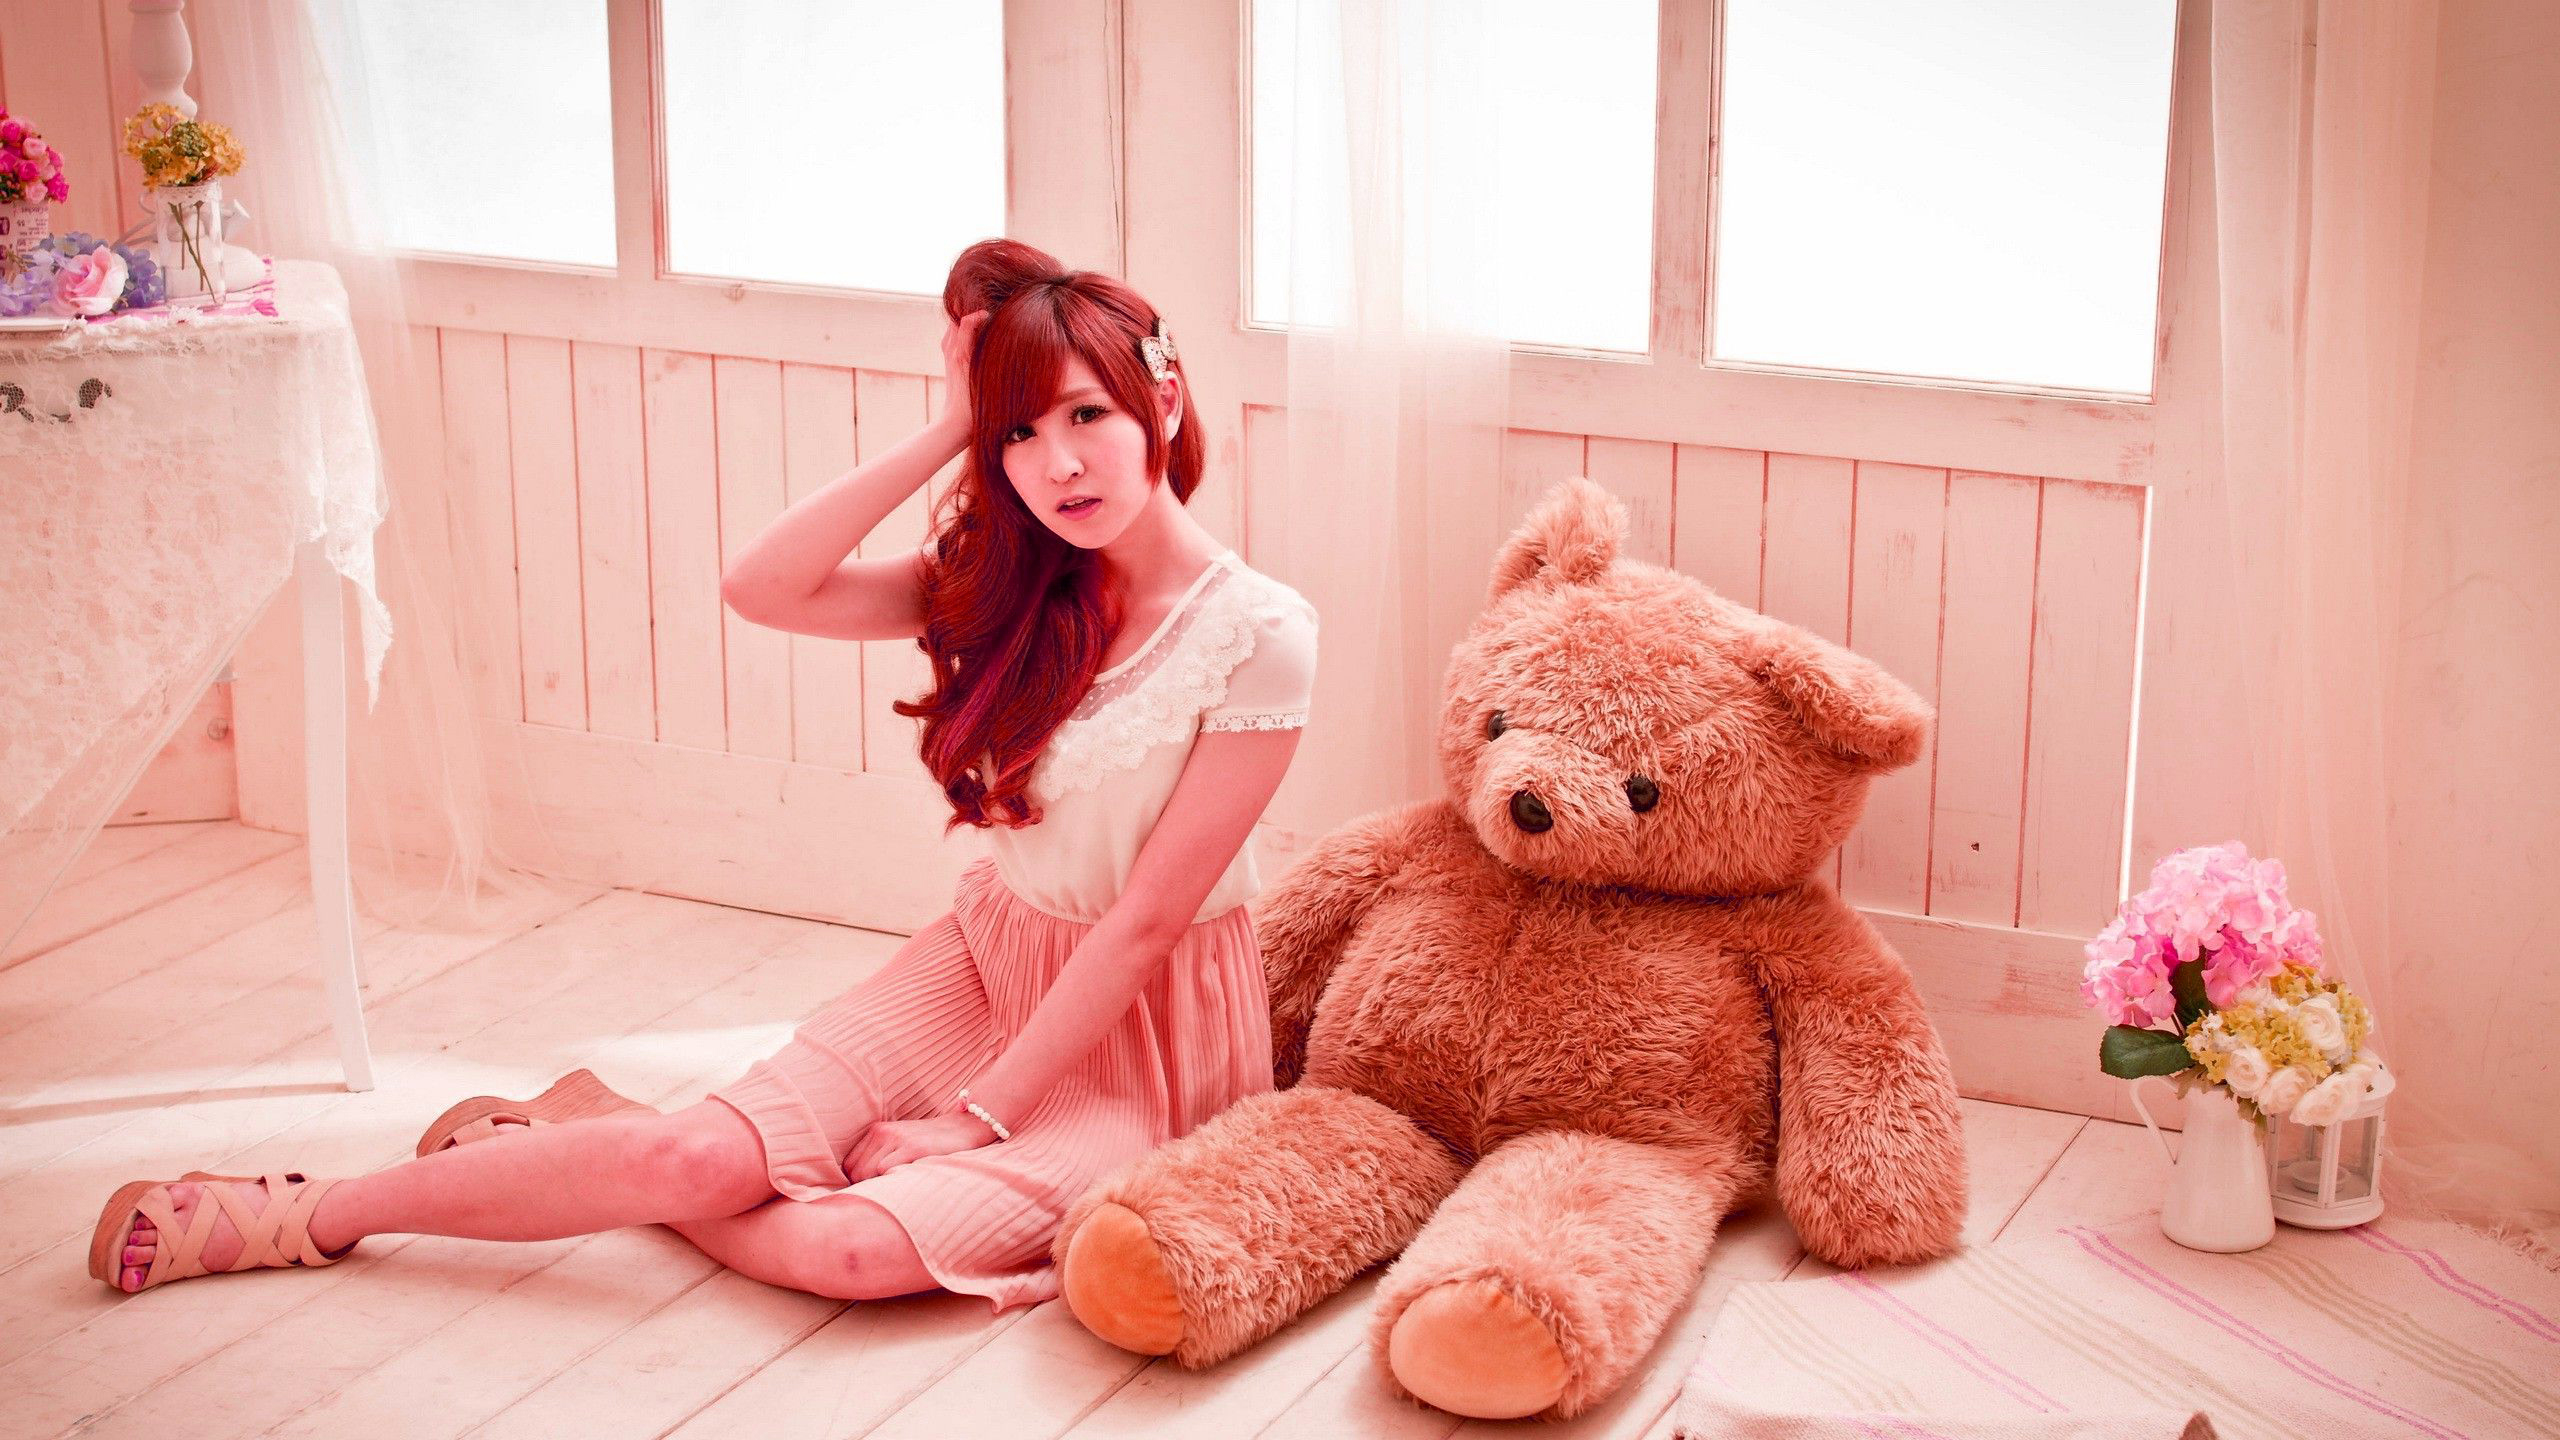 Sweet And Hot Girl Sit With Big Teddy Bear I Love You Teddy Bears